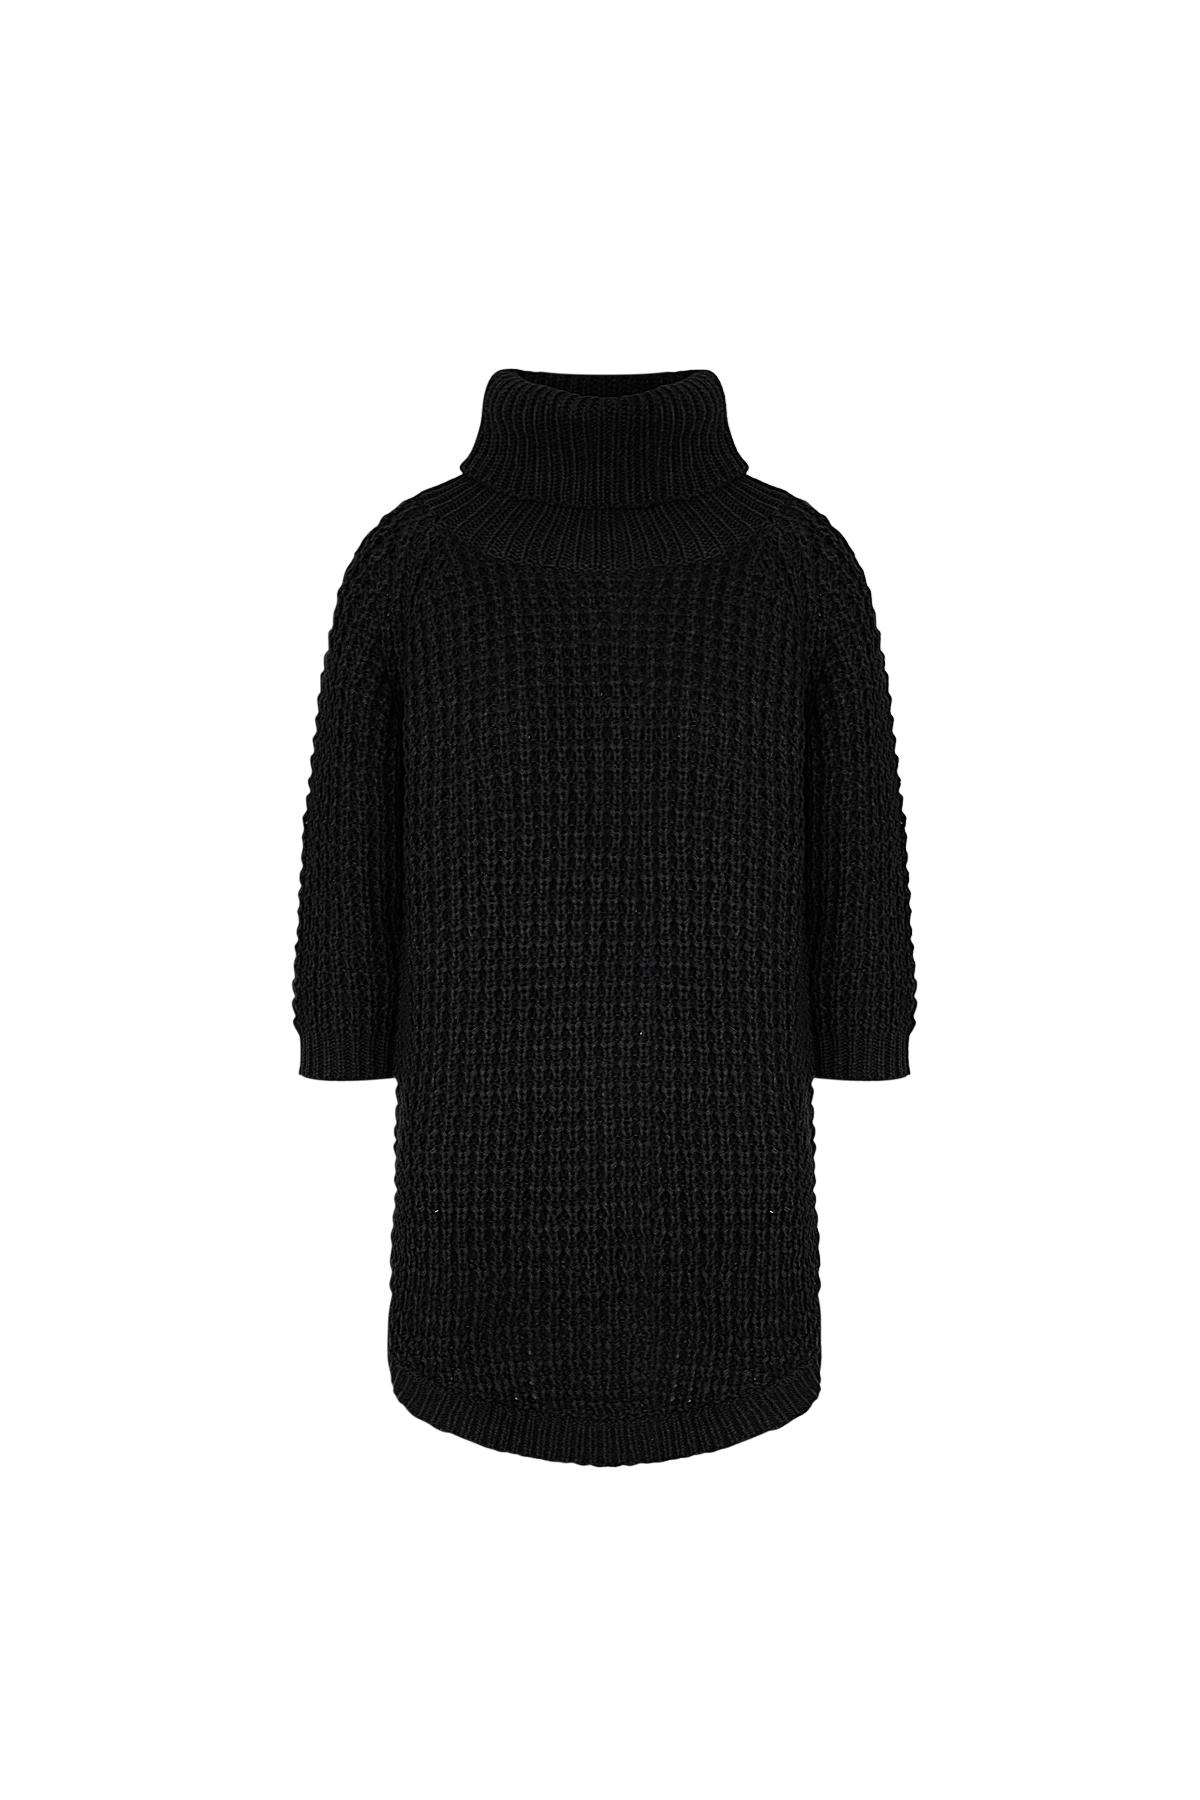 Long turtleneck sweater chunky knit Black L/XL h5 